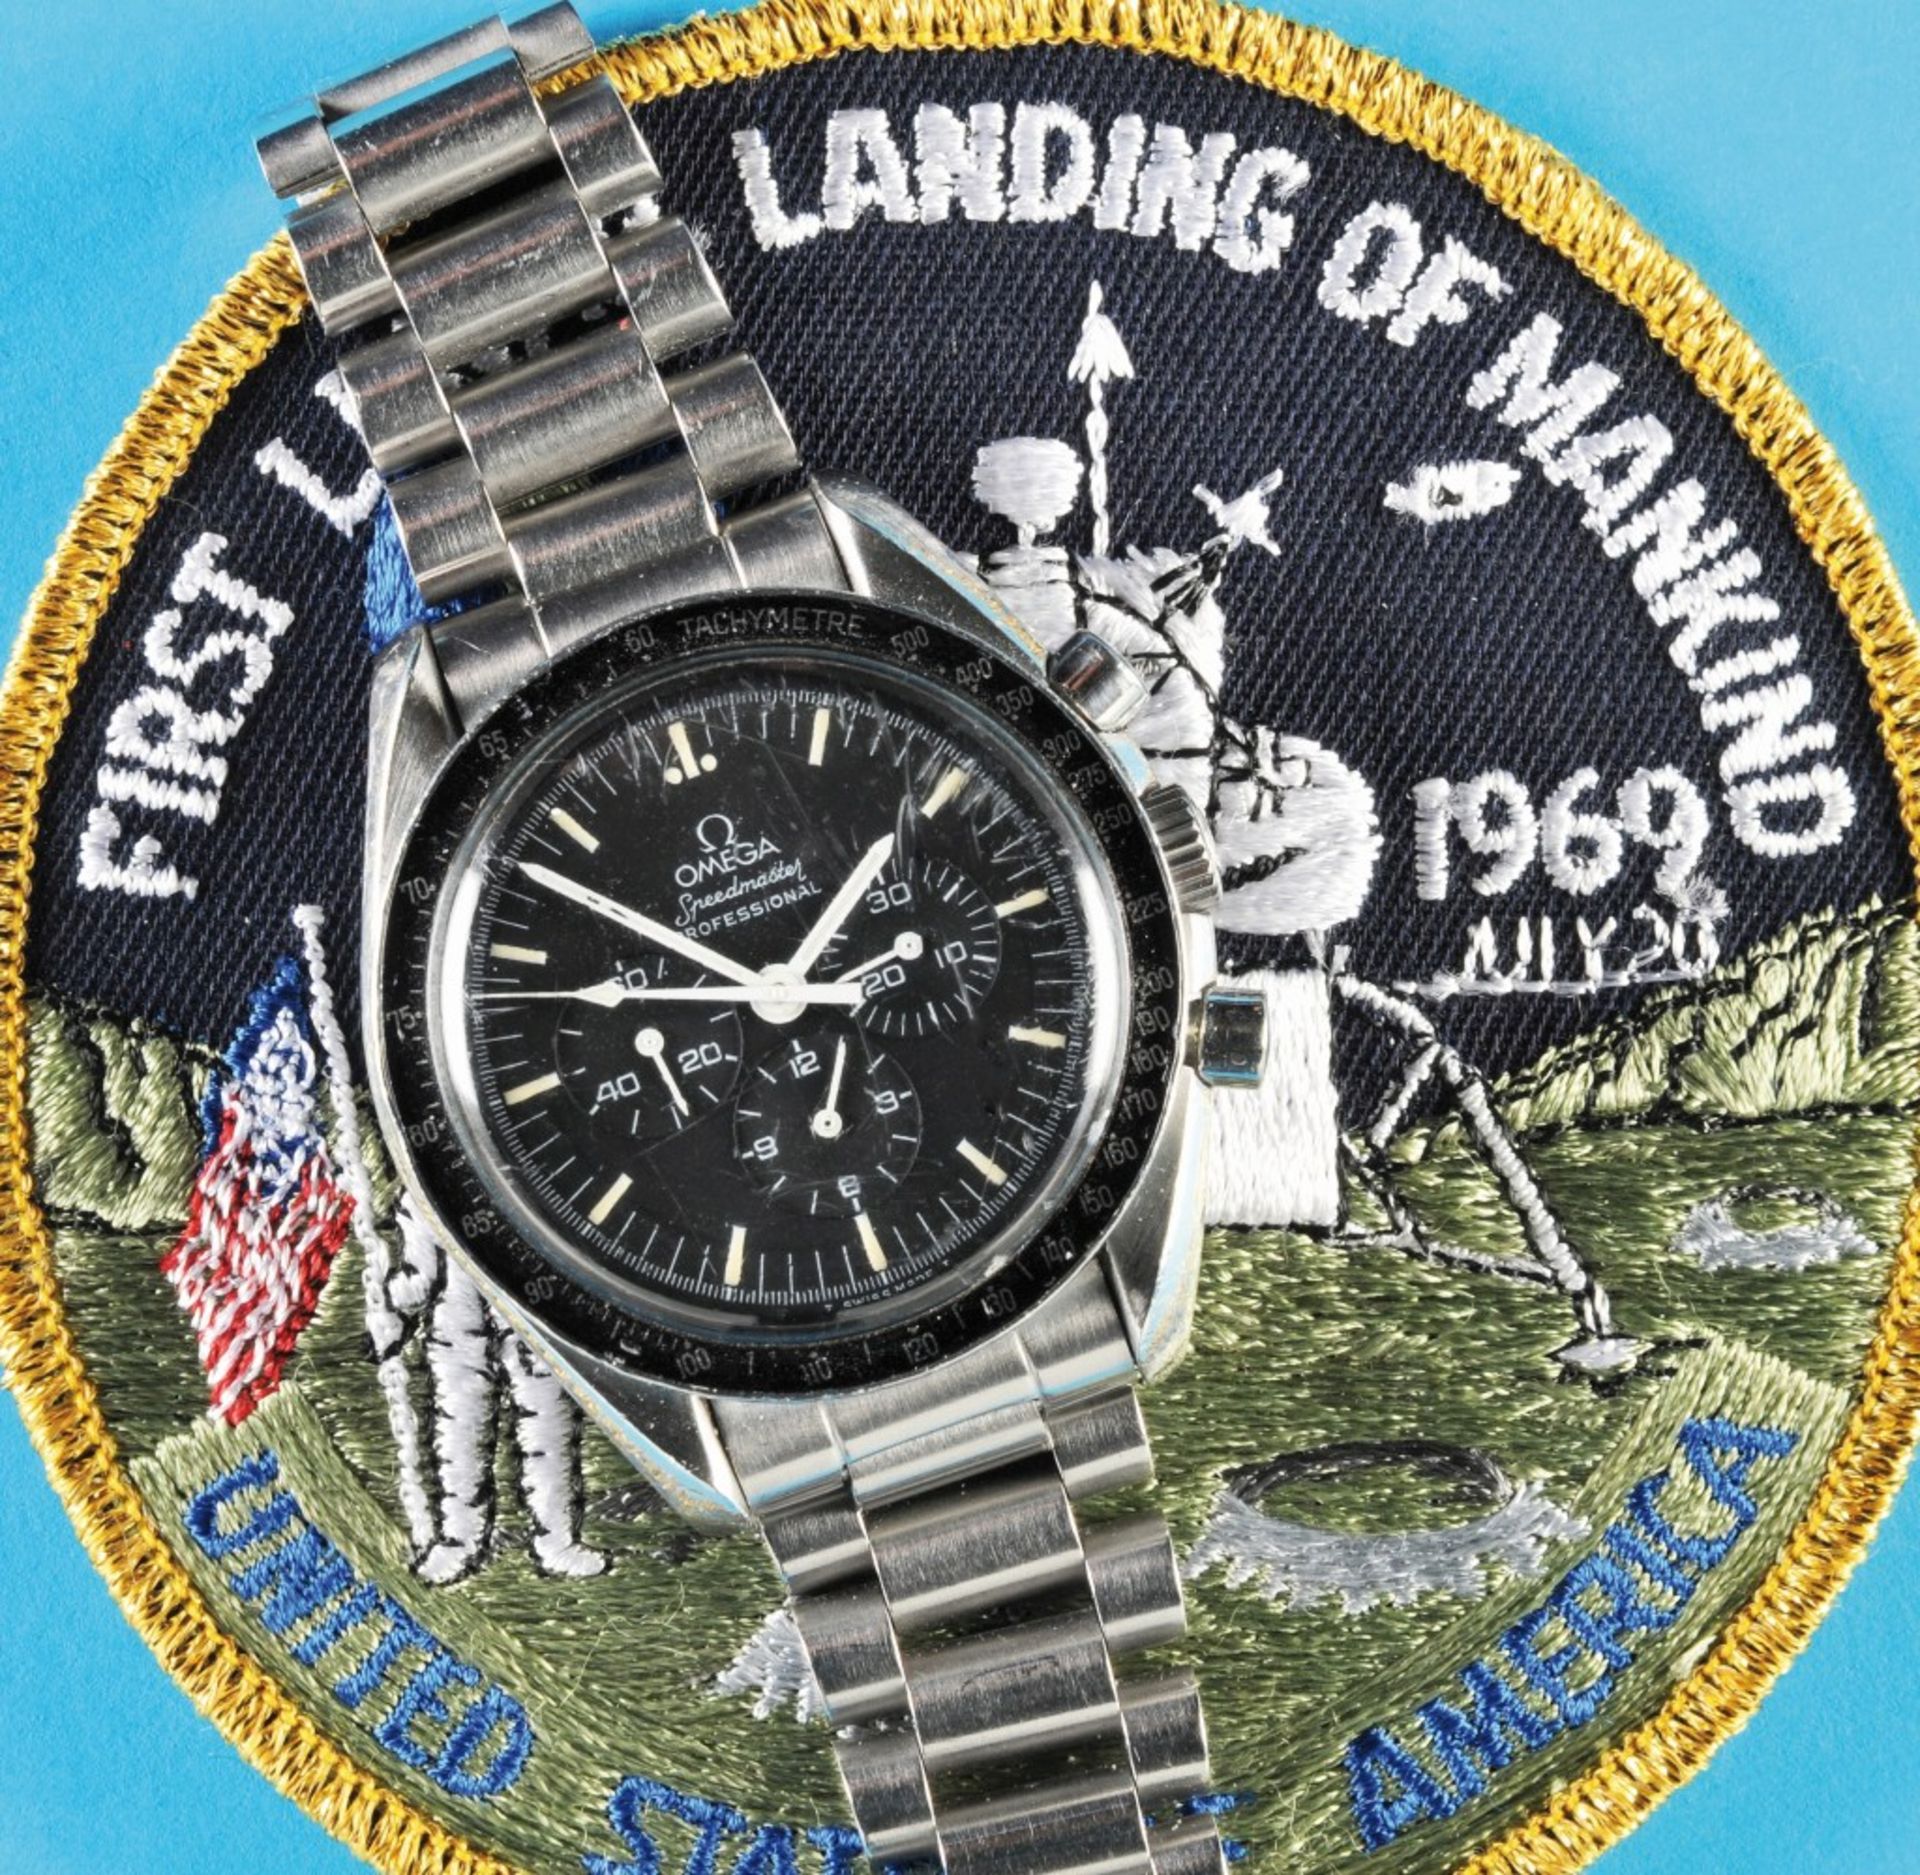 Anniversary watch 20th anniversary moon landing, Omega Speedmaster Professional "First Watch worn o